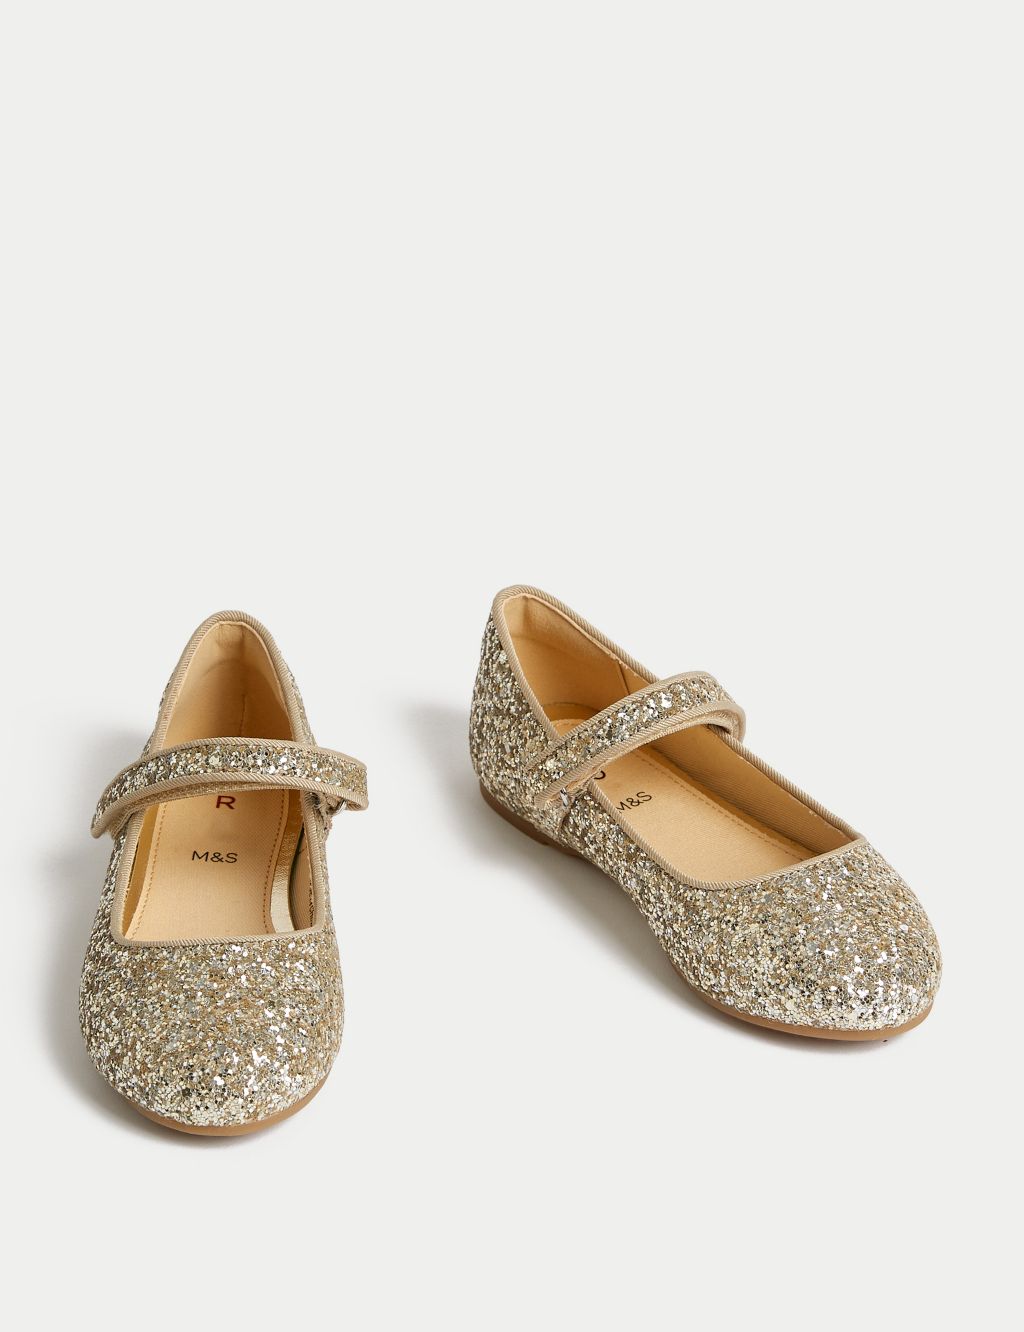 Kids' Glitter Mary Jane Shoes (4 Small - 2 Large) image 2